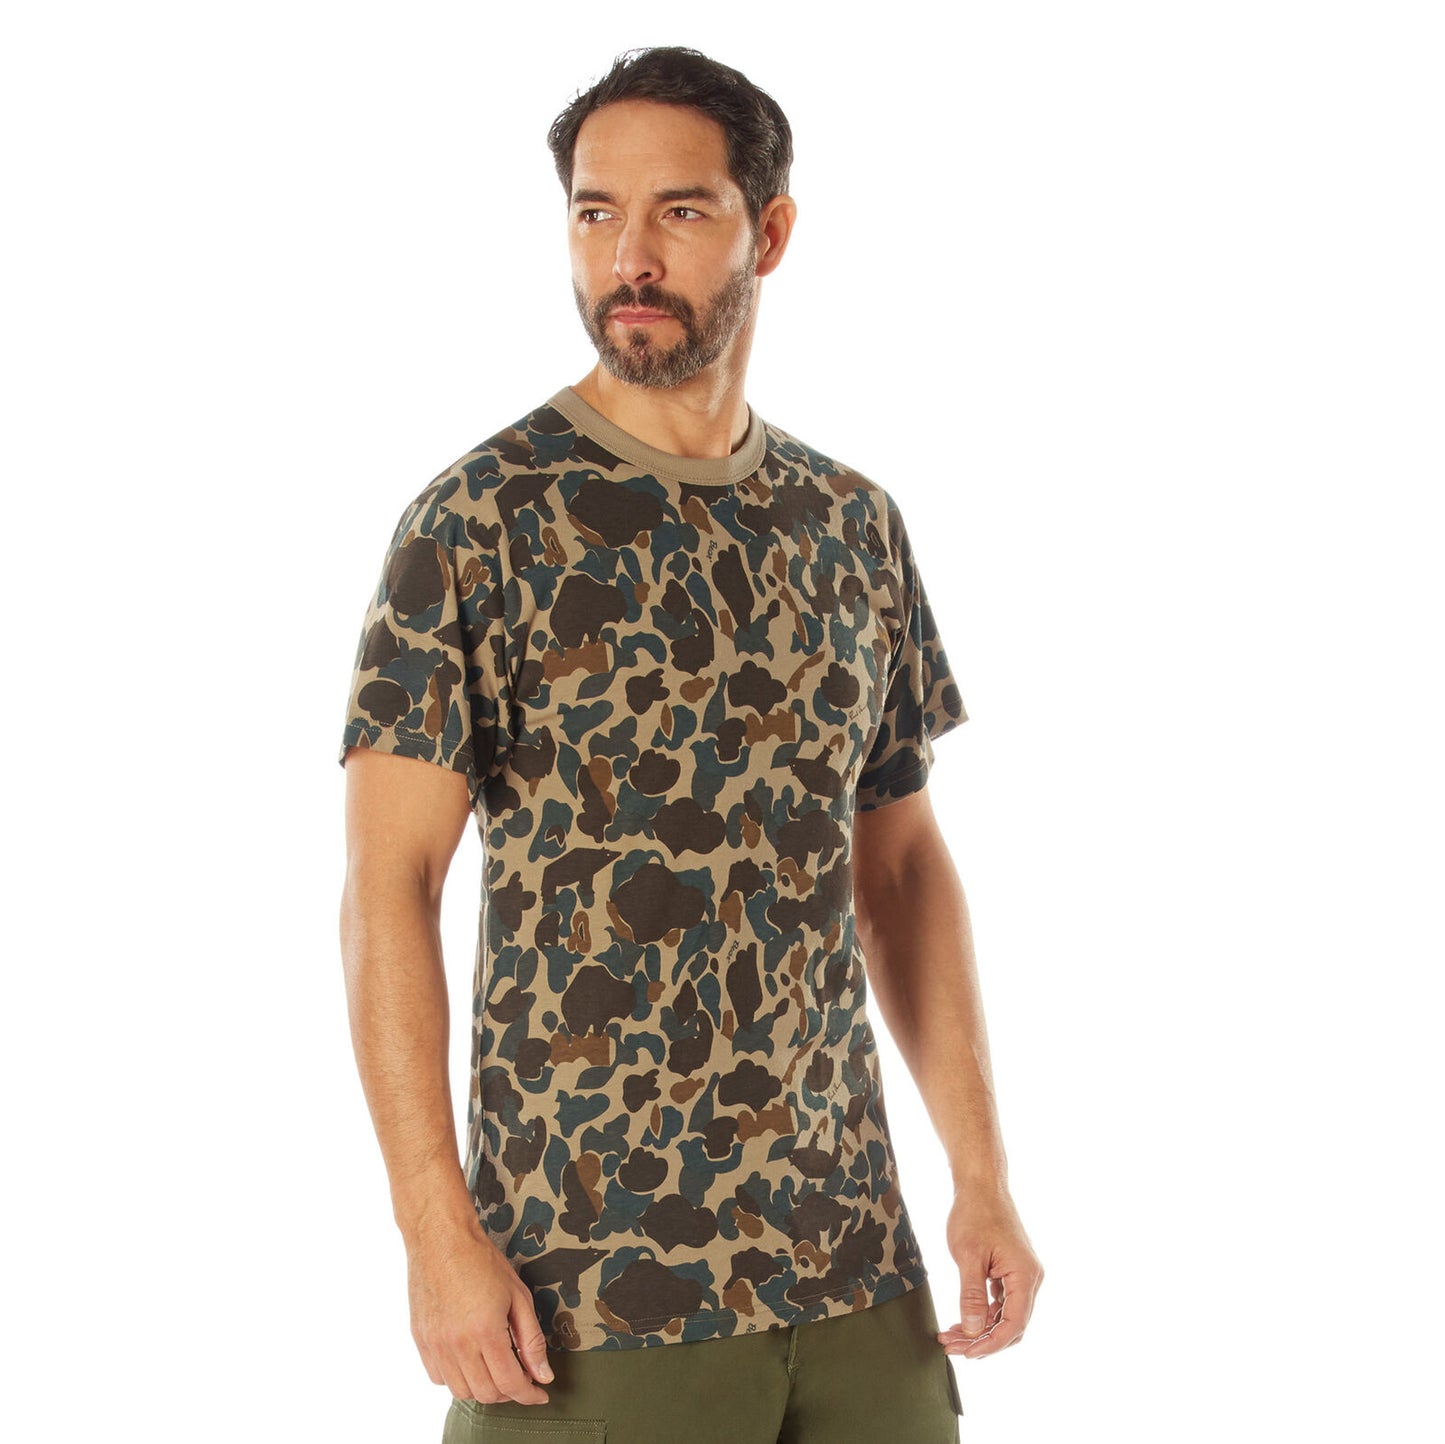 Rothco X Bear Archery Fred Bear Camo T-Shirt - Standard Fit Camouflage Shirt